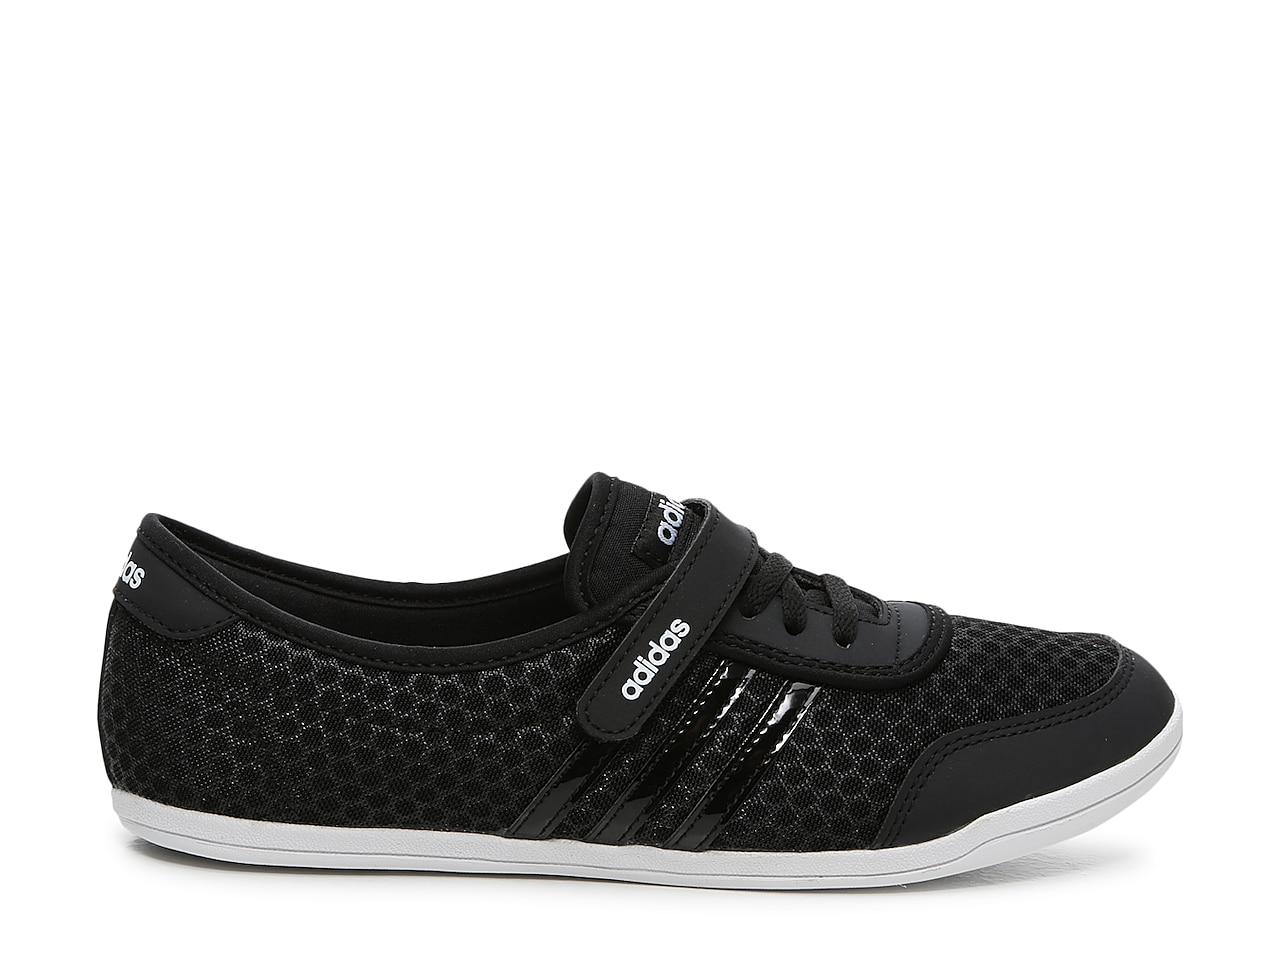 adidas Rubber Diona Slip-on Sneaker in Black/White (Black) | Lyst